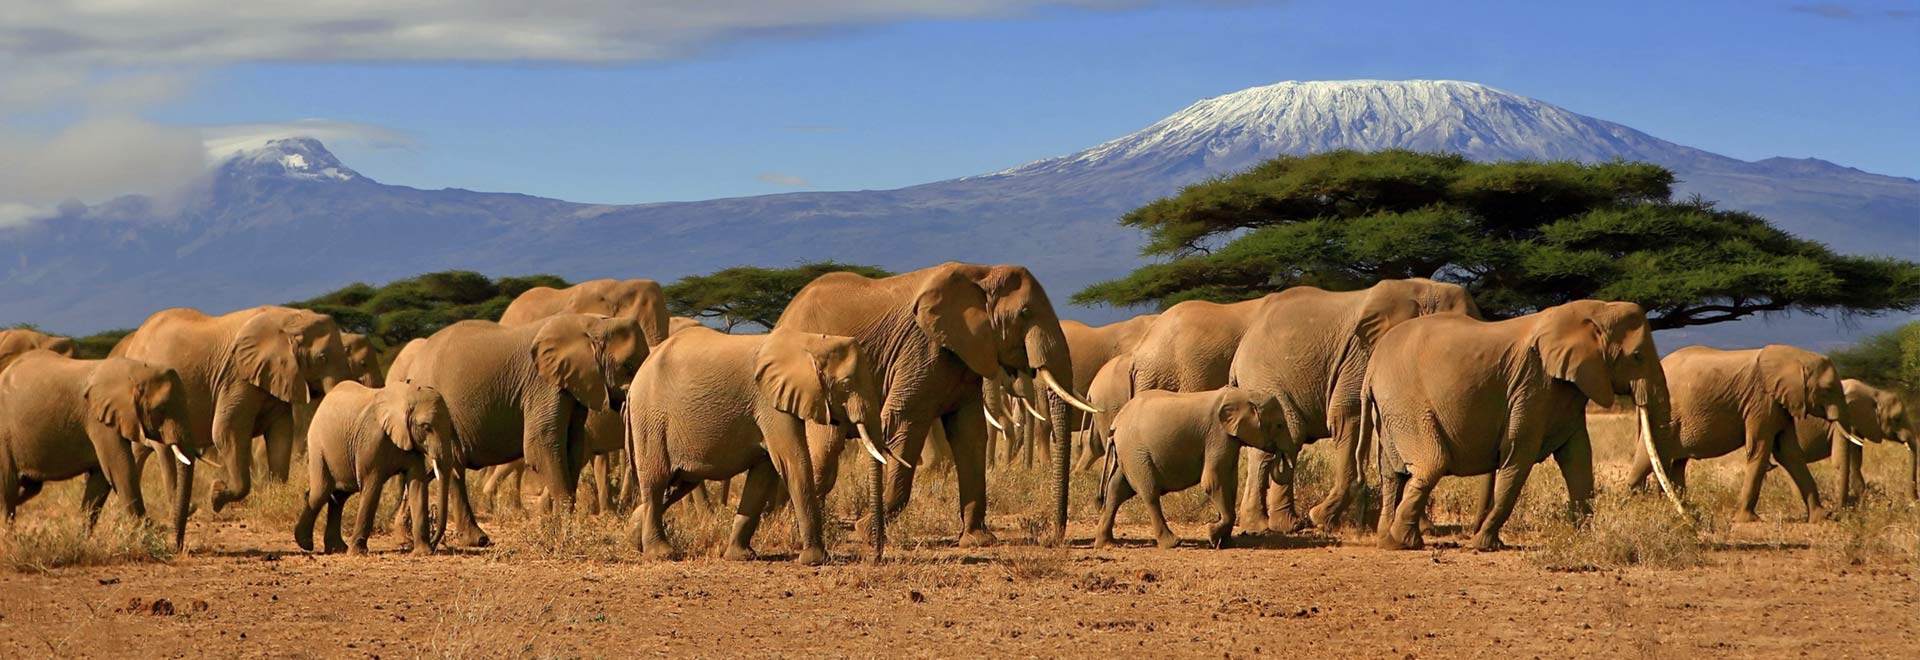 Kenya u0026 Tanzania Wildlife Safari | Abercrombie u0026 Kent